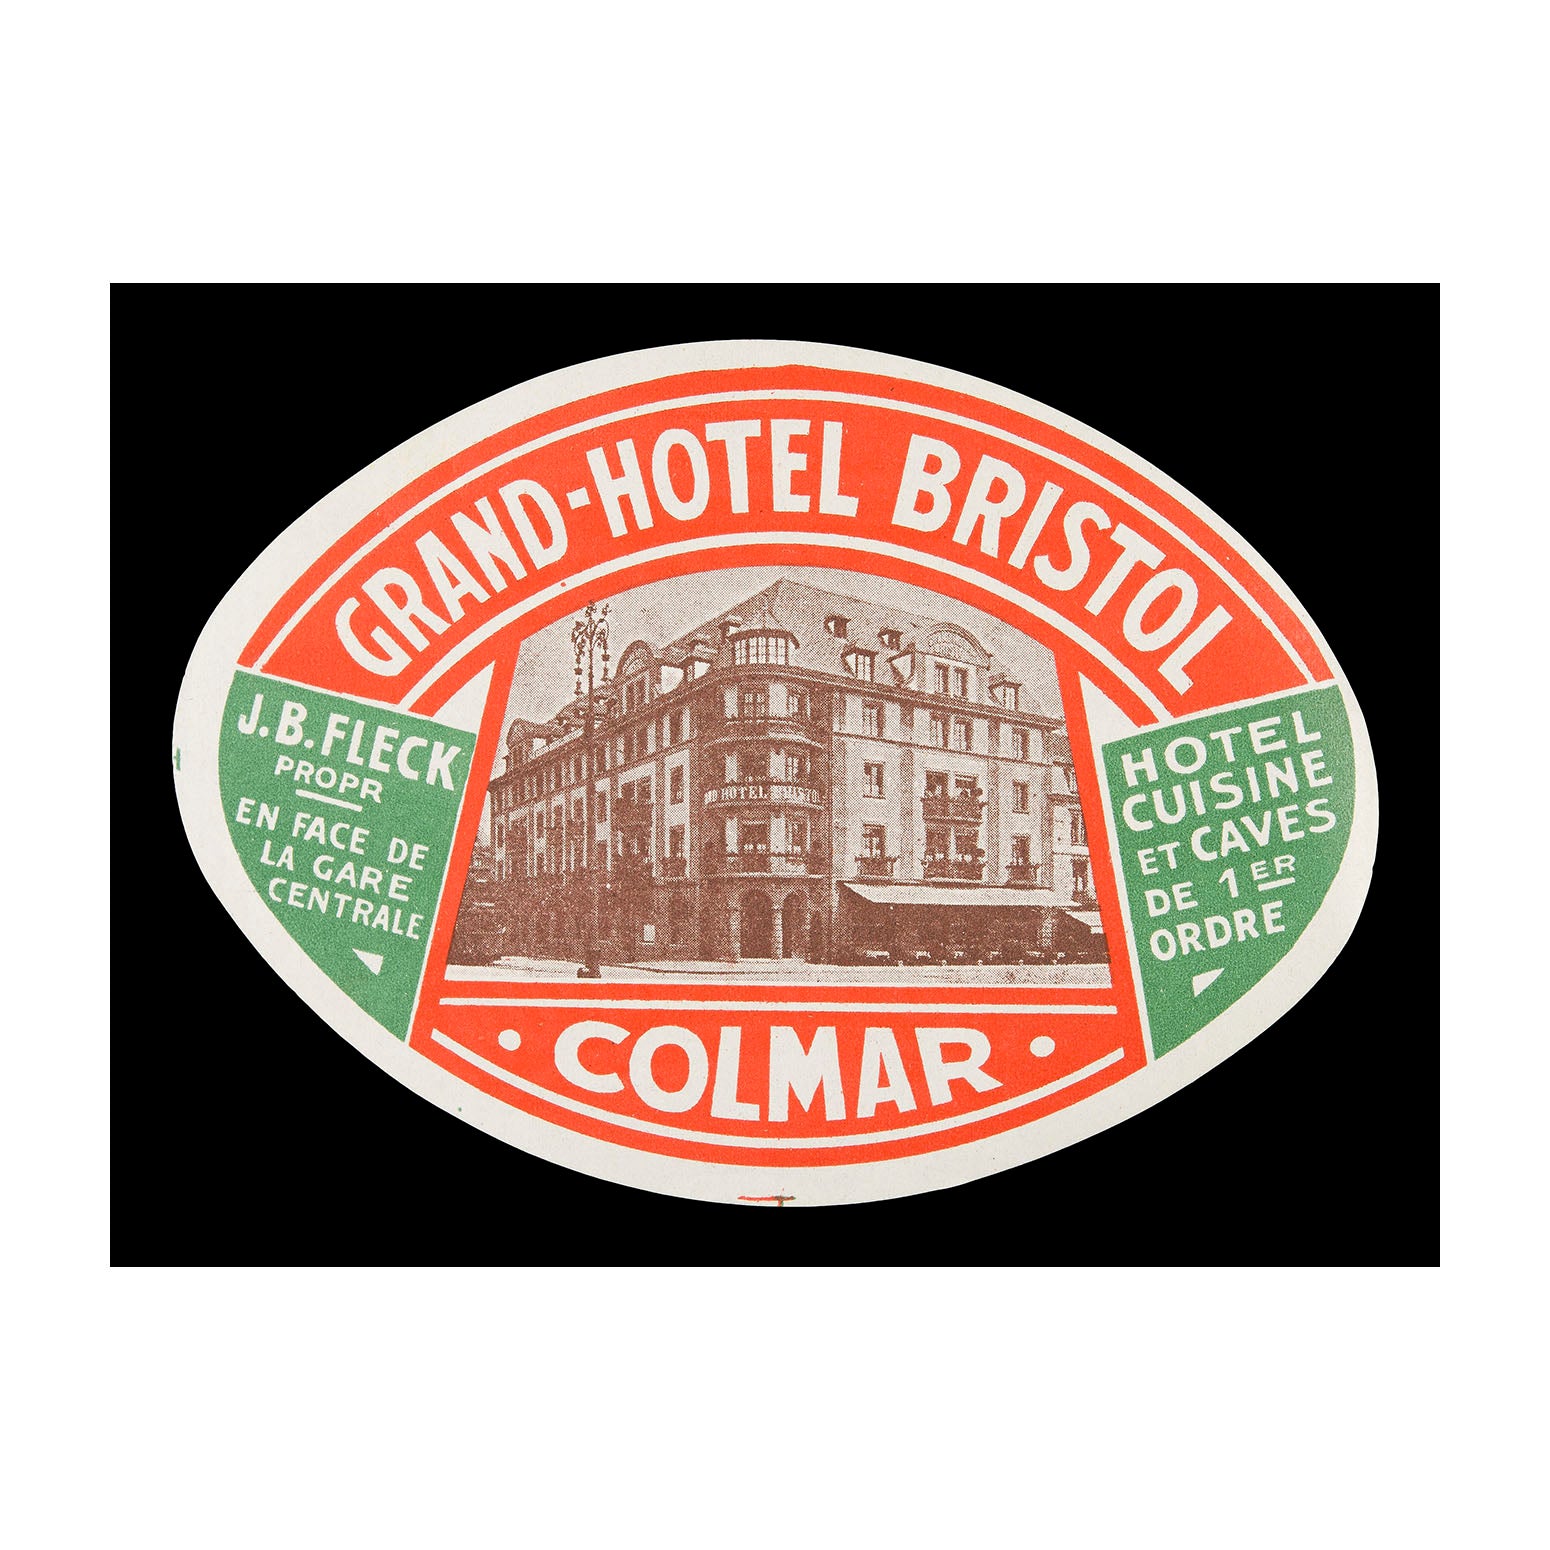 Grand Hotel Bristol, Colmar (Luggage Label)